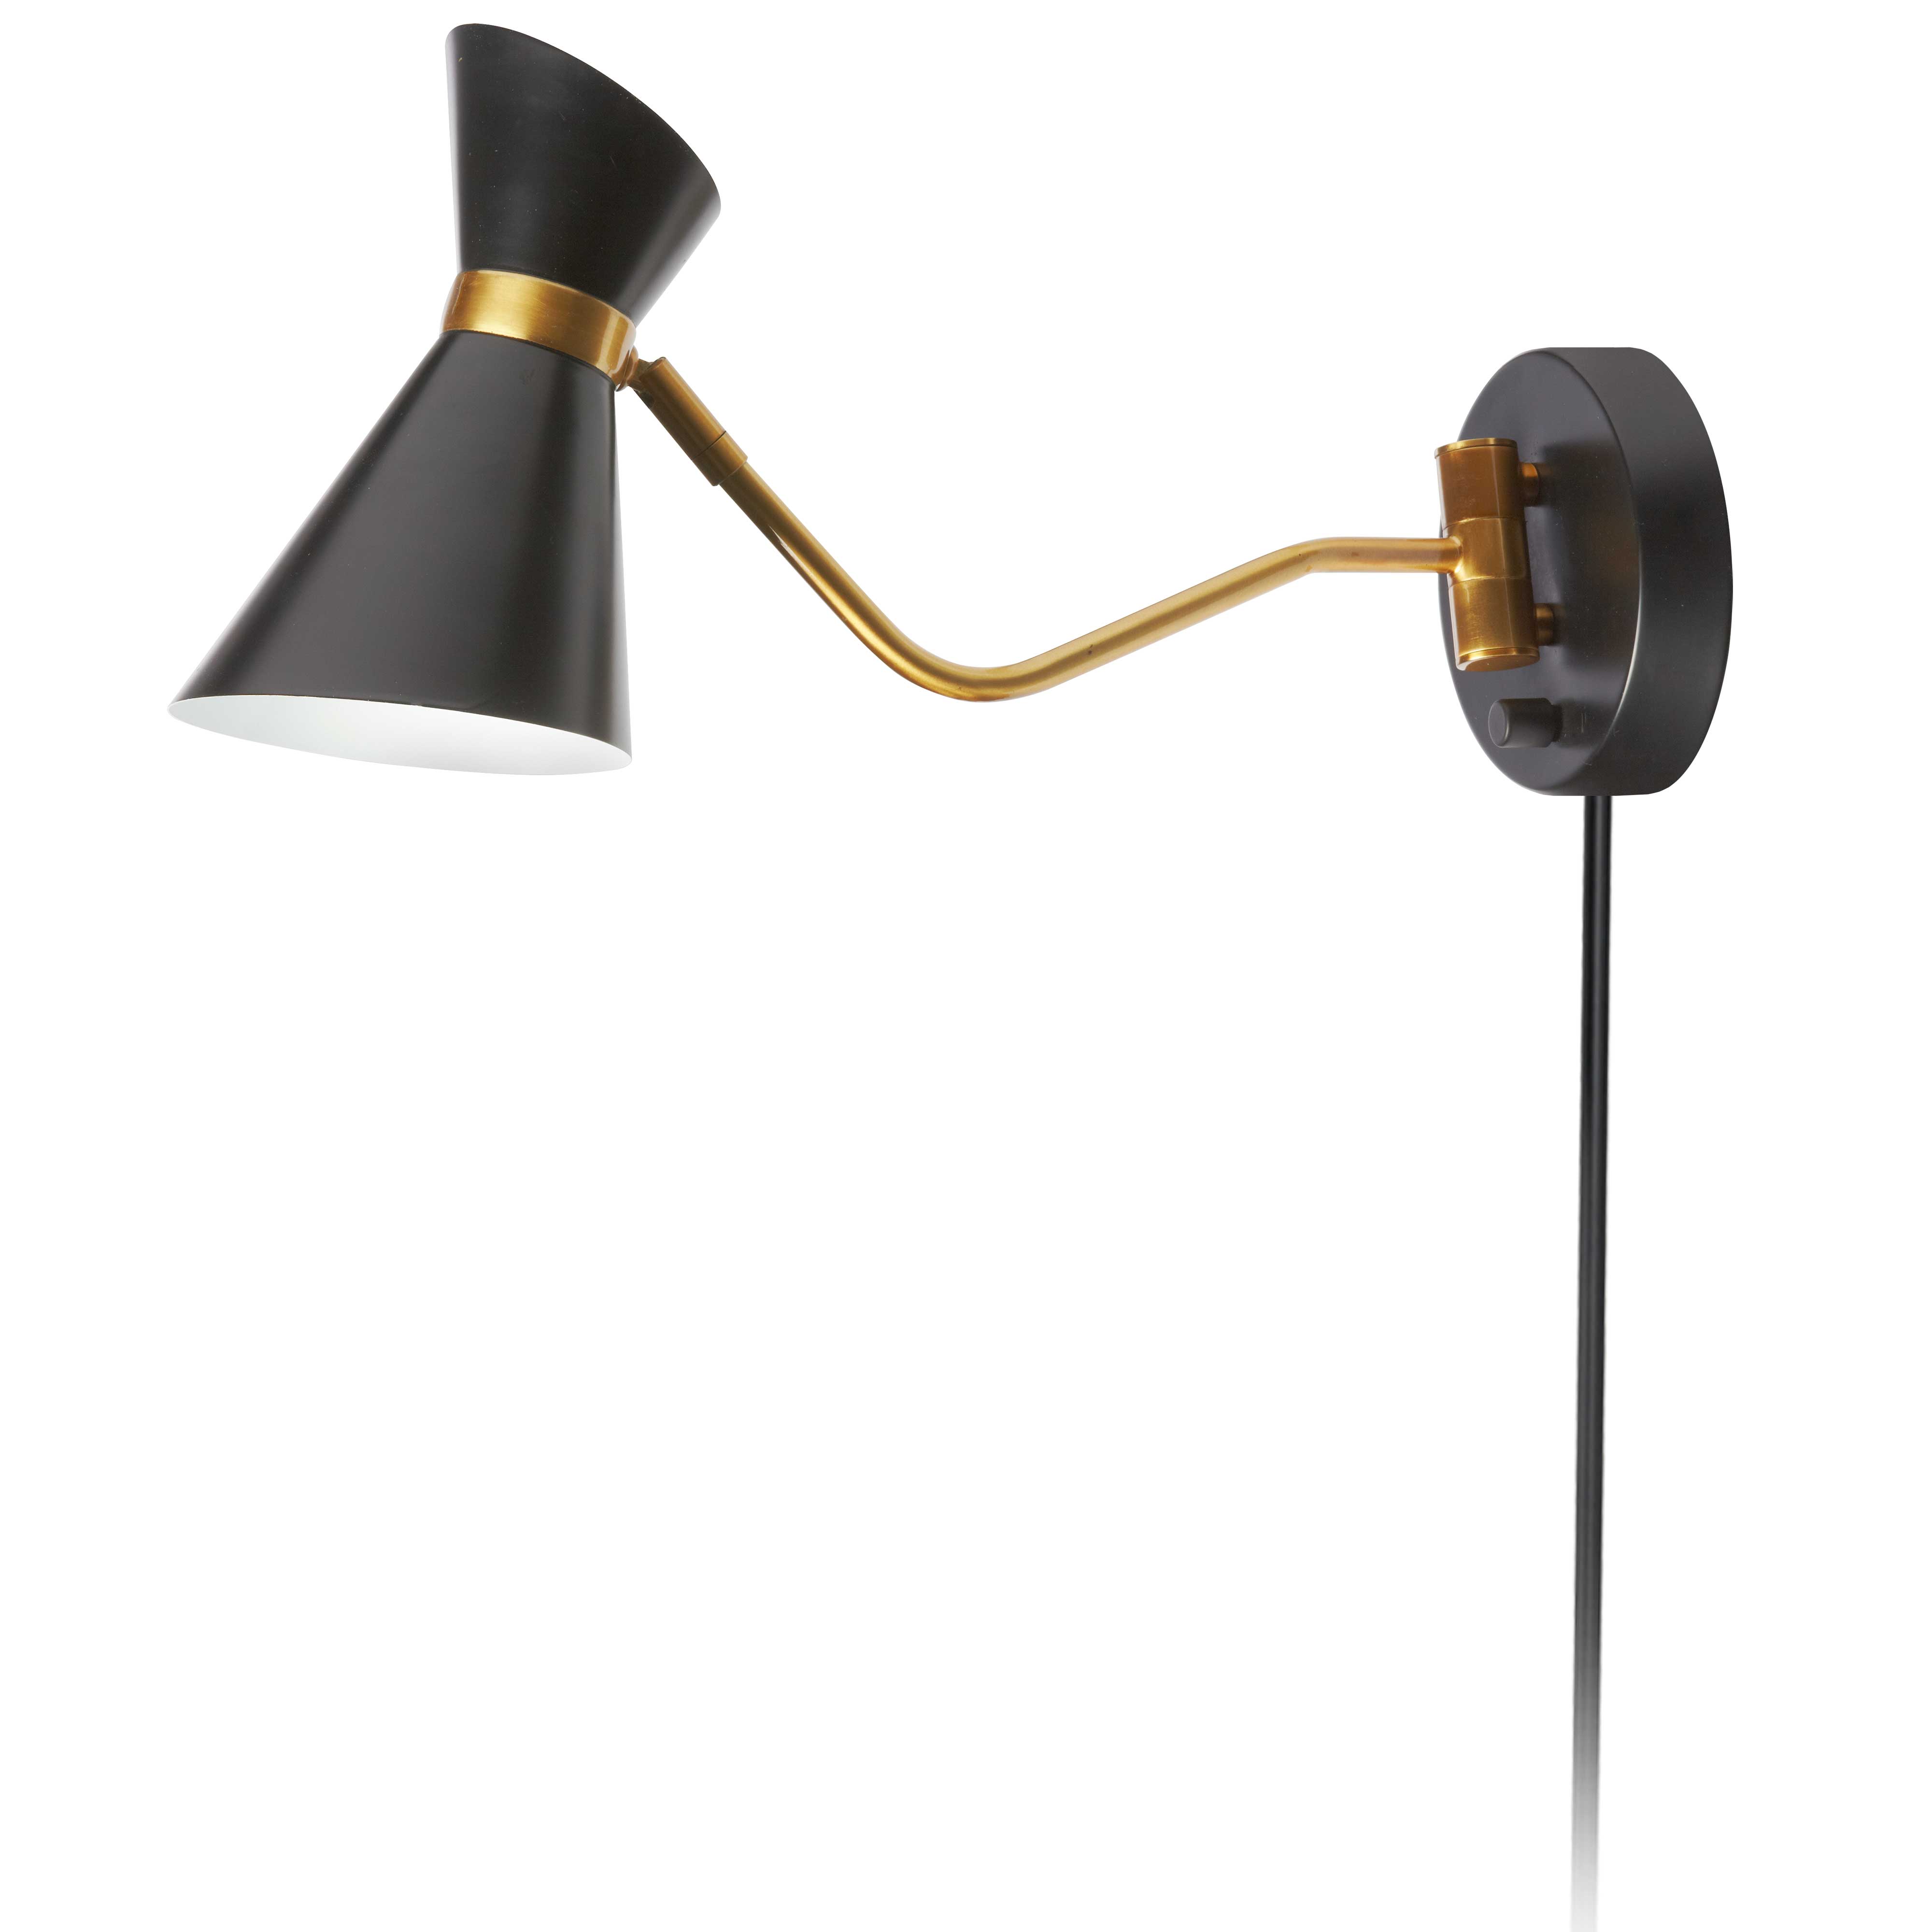 1 Light Wall Lamp, Black & Vintage Bronze Finish